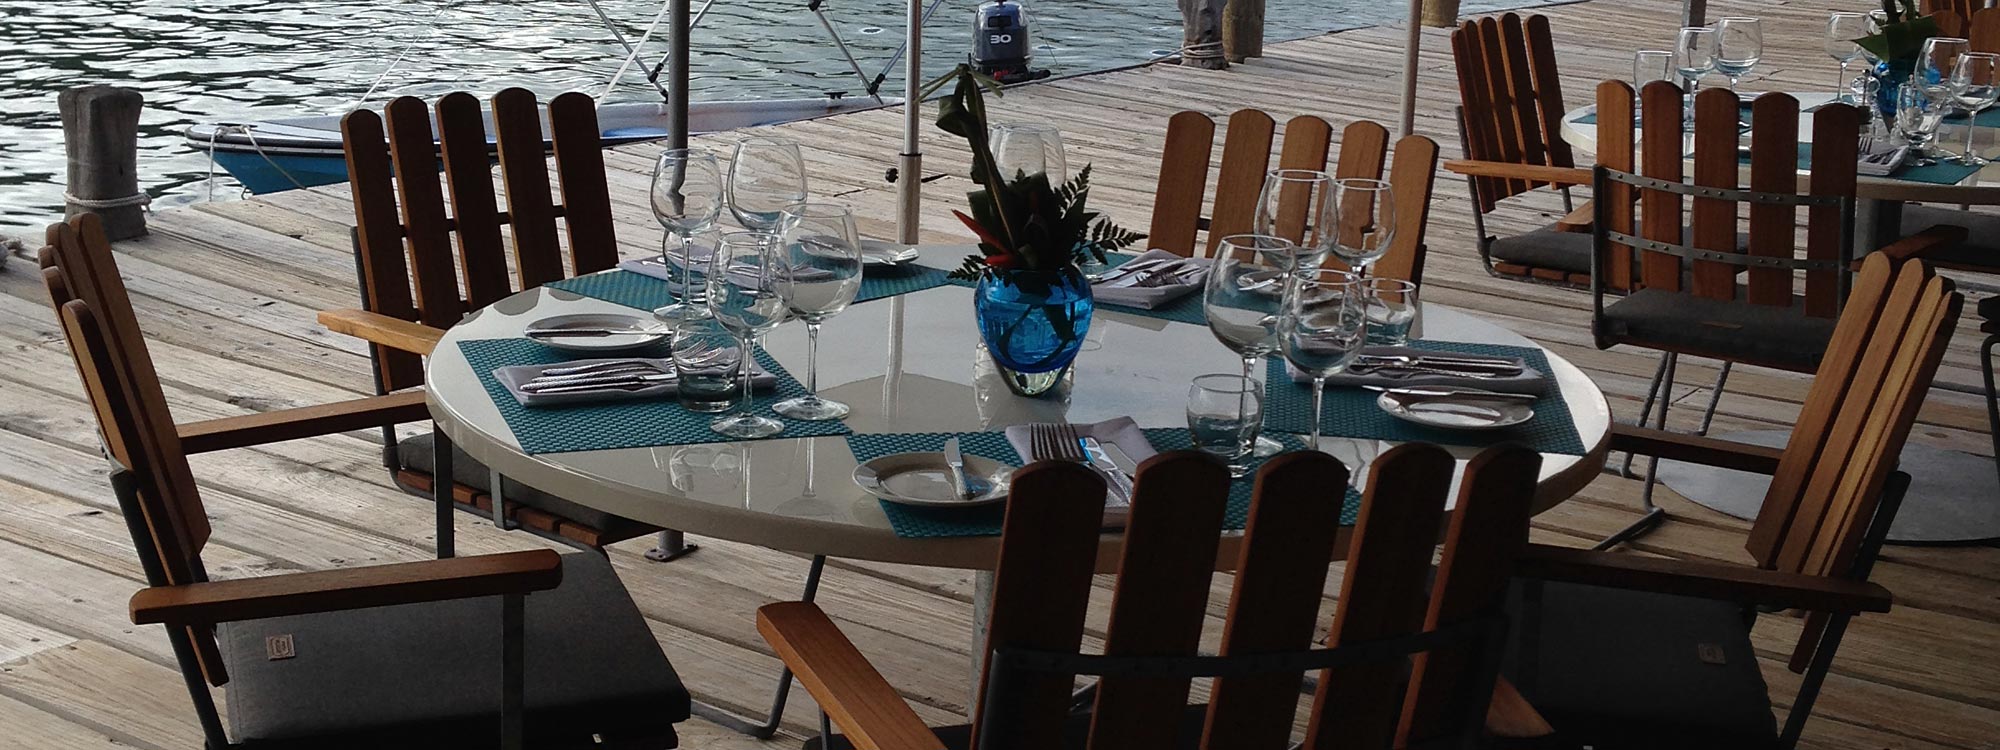 image of Scandinavian outdoor dining furniture in Caribbean